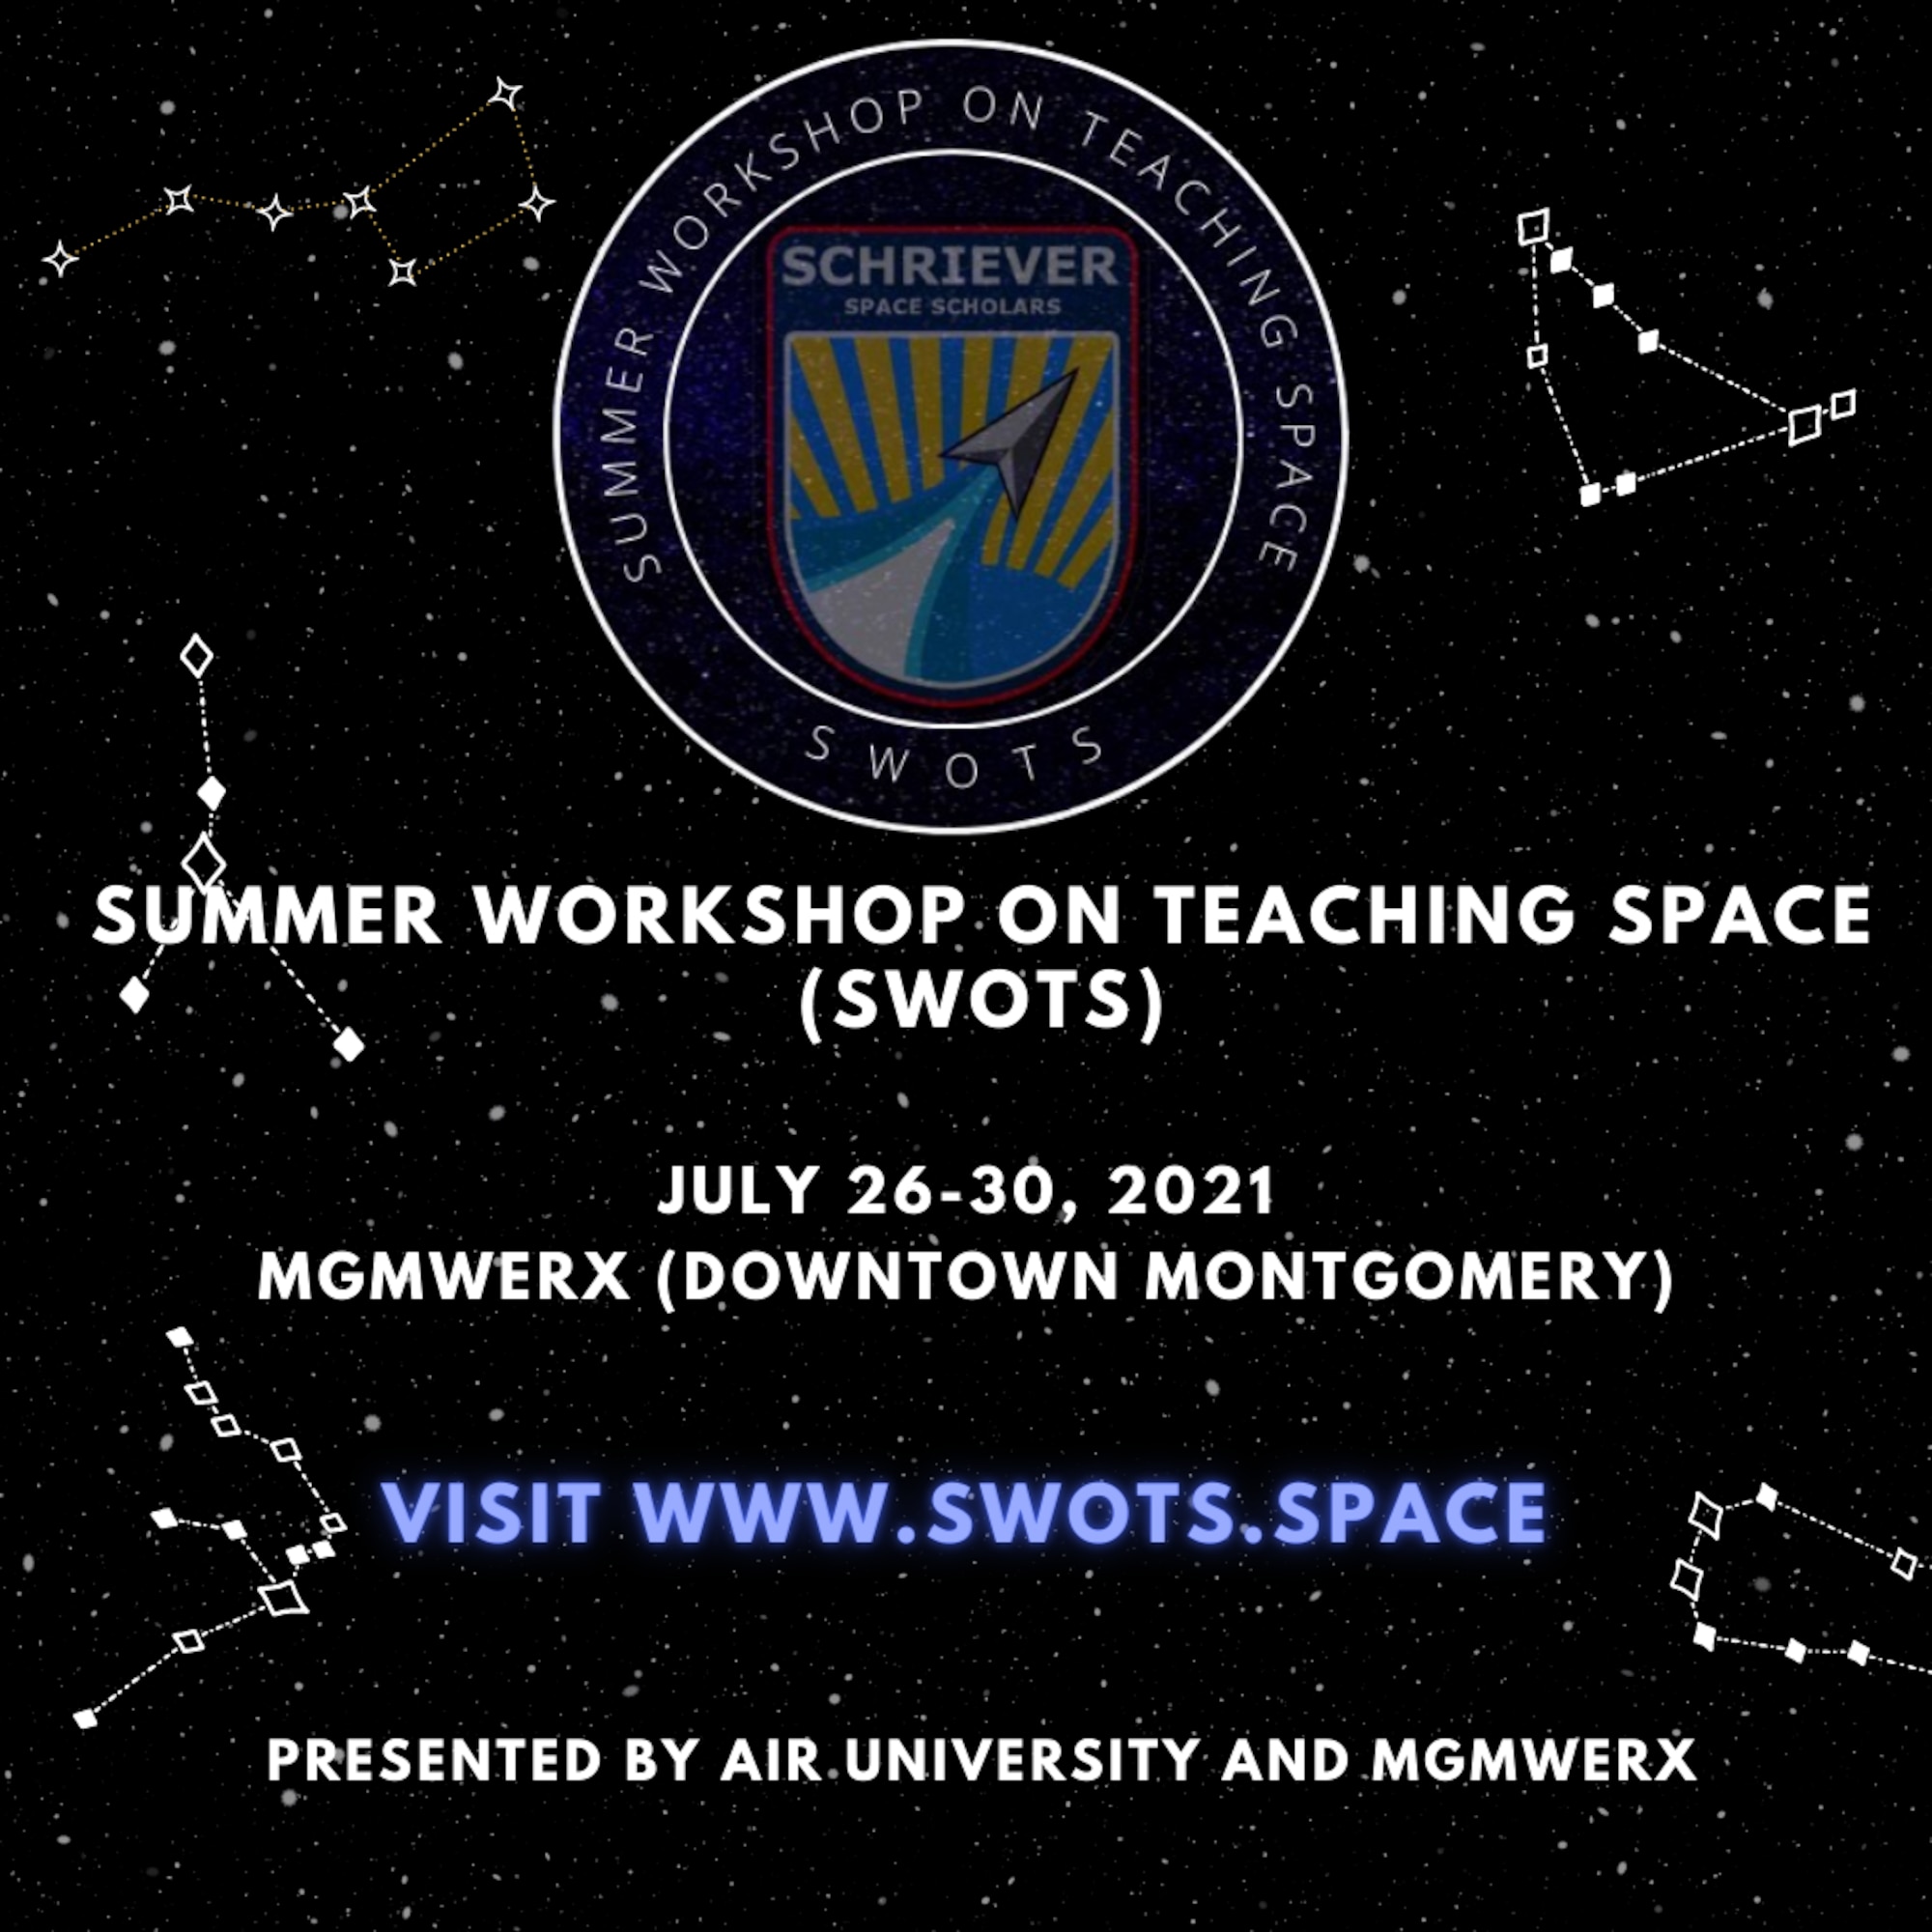 Summer workshop on teaching space flyer.